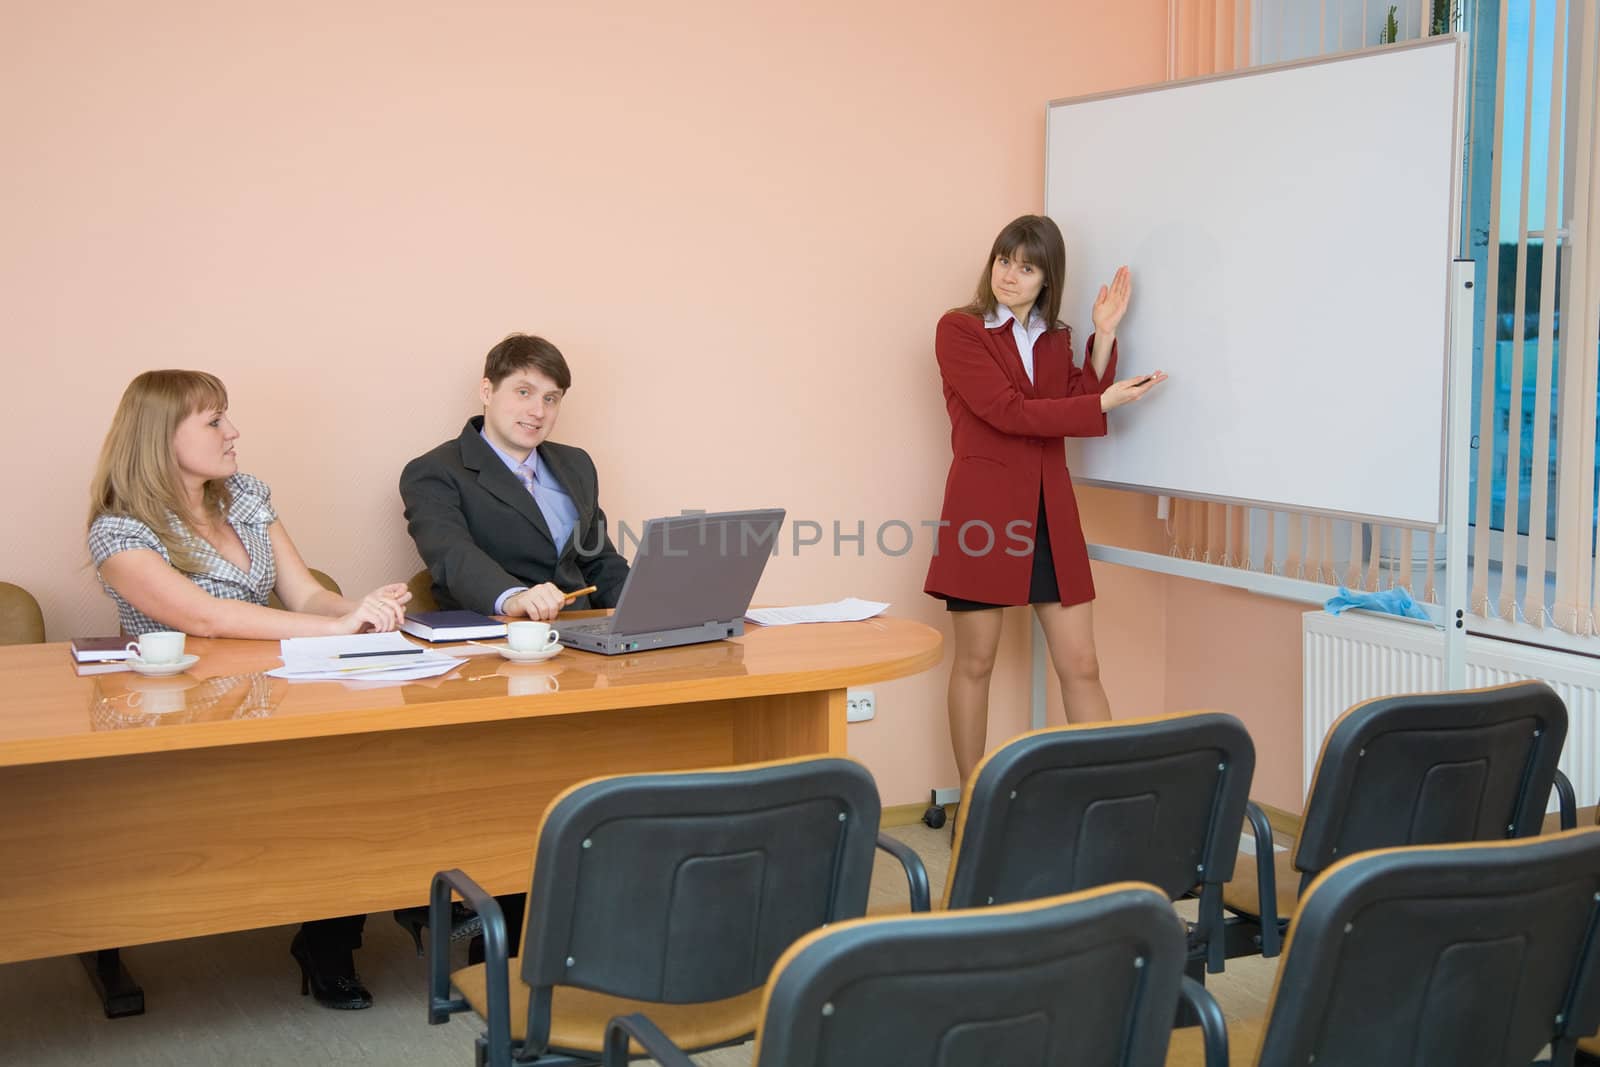 Girl passing exams standing near a big screen